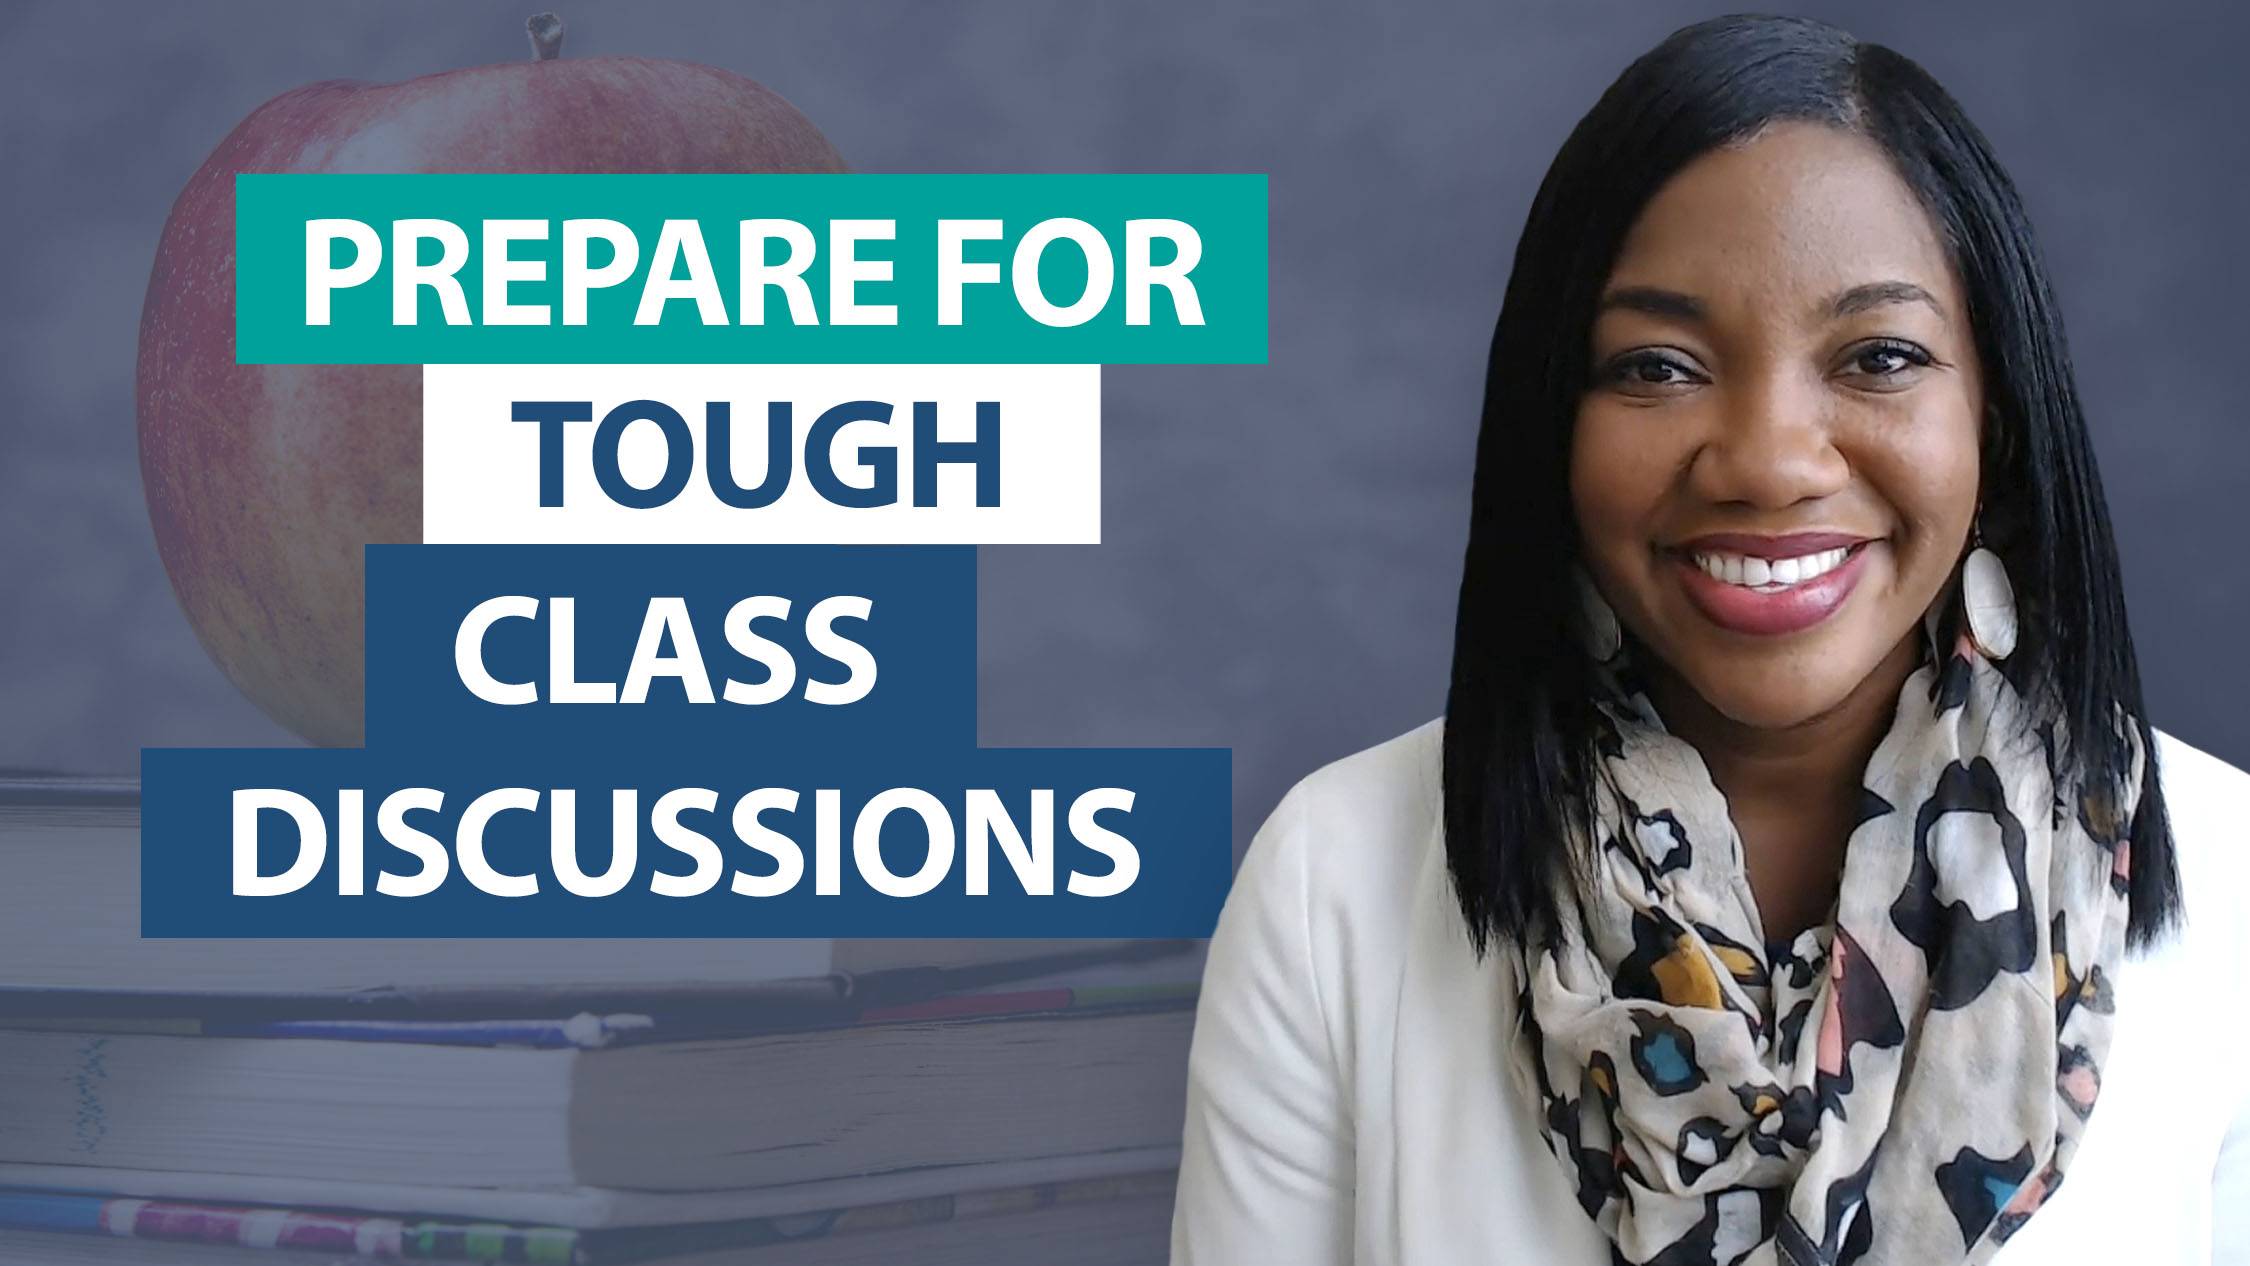 How do I prepare for tough class discussions?